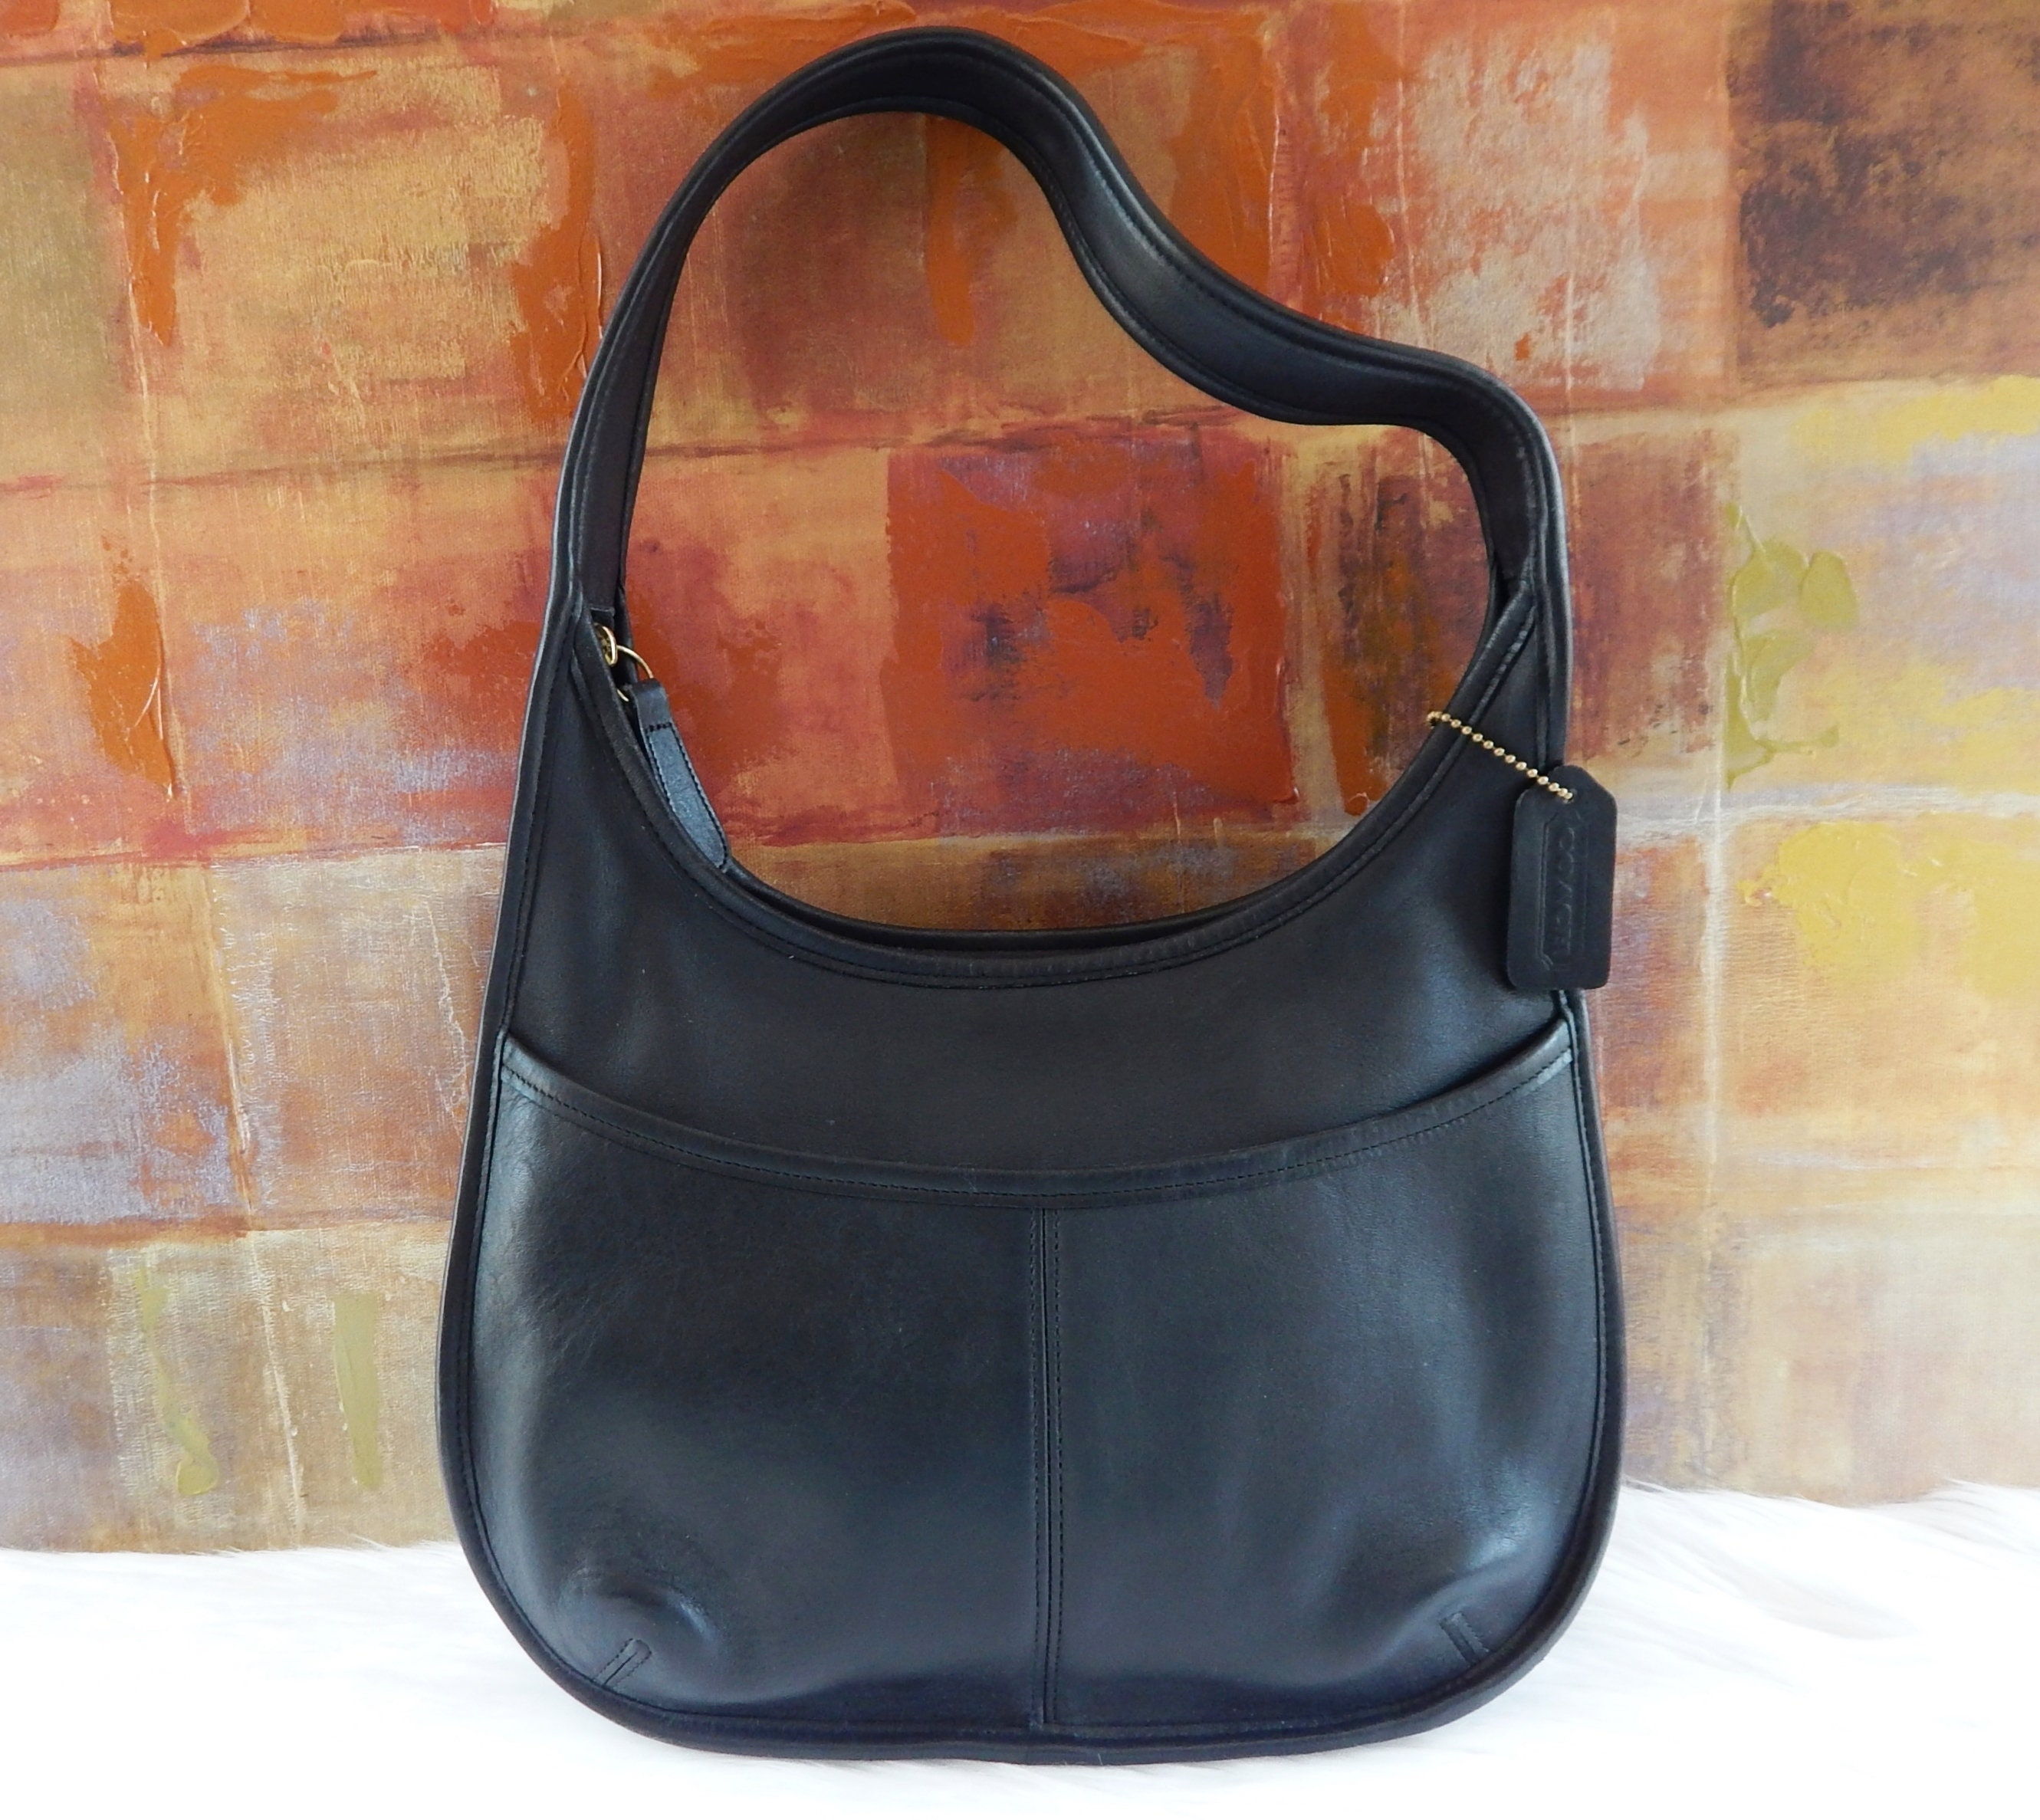 Rare Color Vintage Coach Ergo Leather Hobo Shoulder Handbag 9033